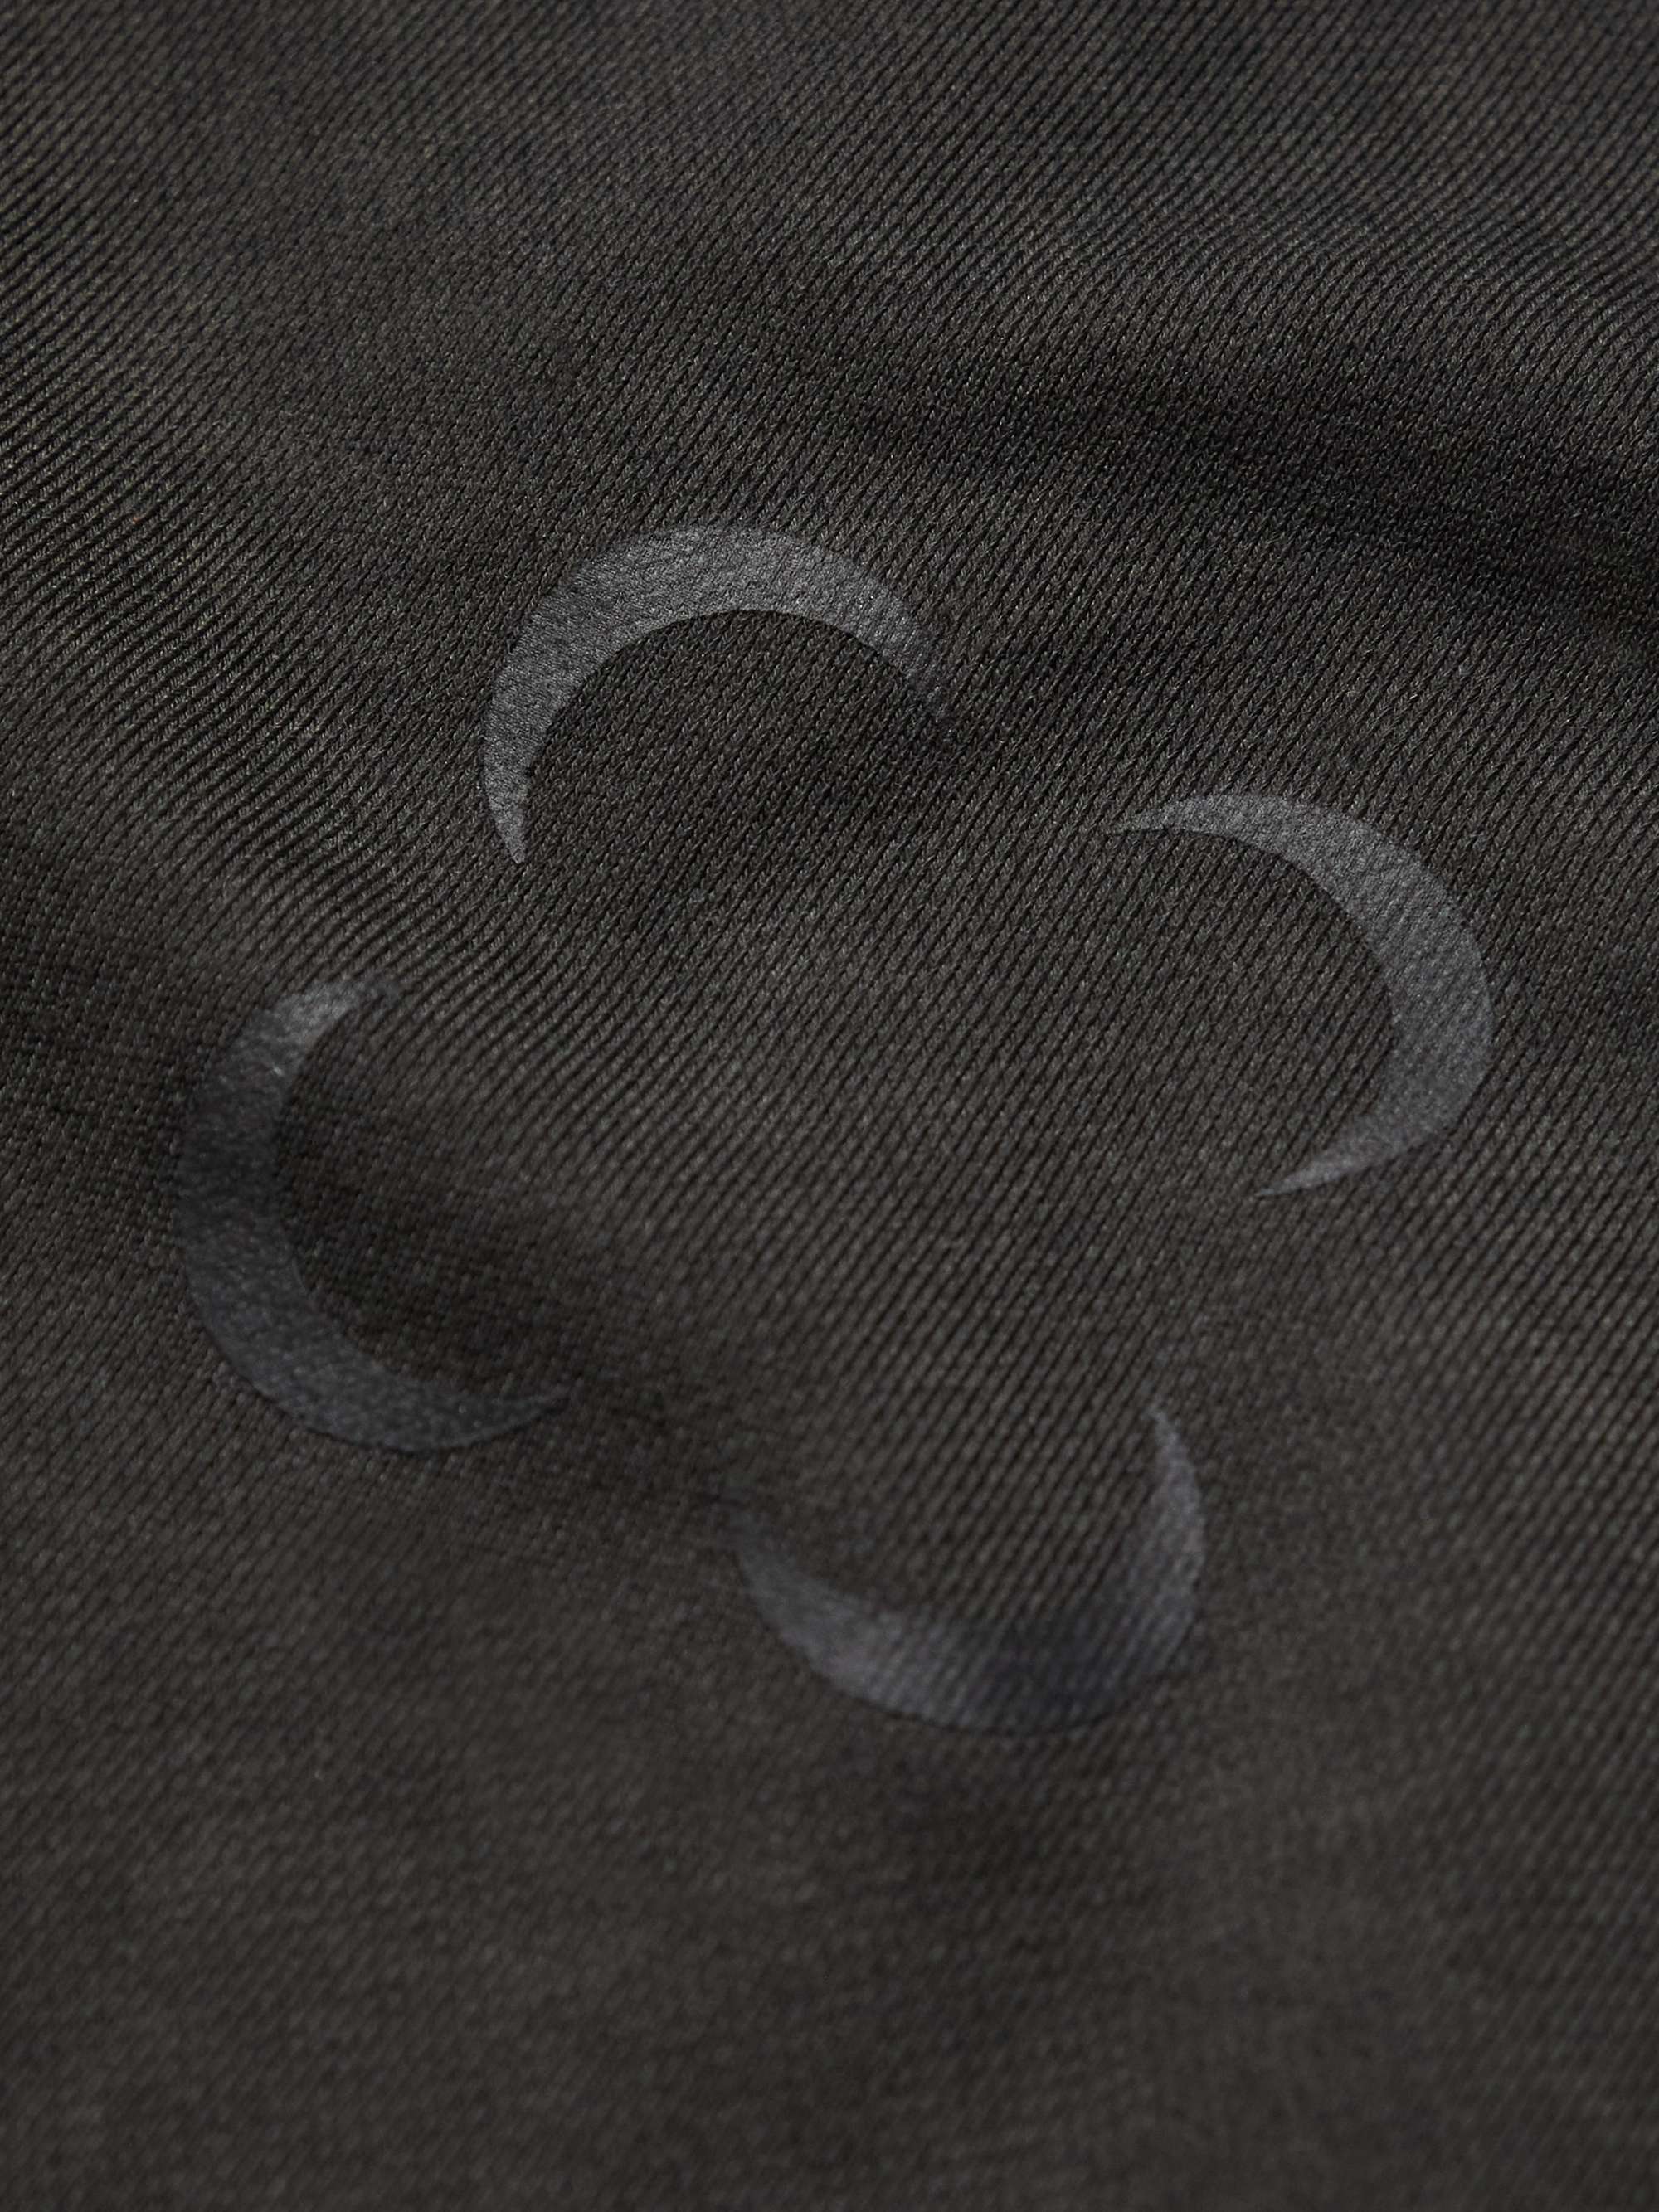 SAIF UD DEEN Cold-Dyed Logo-Print Cotton-Jersey Sweatshirt